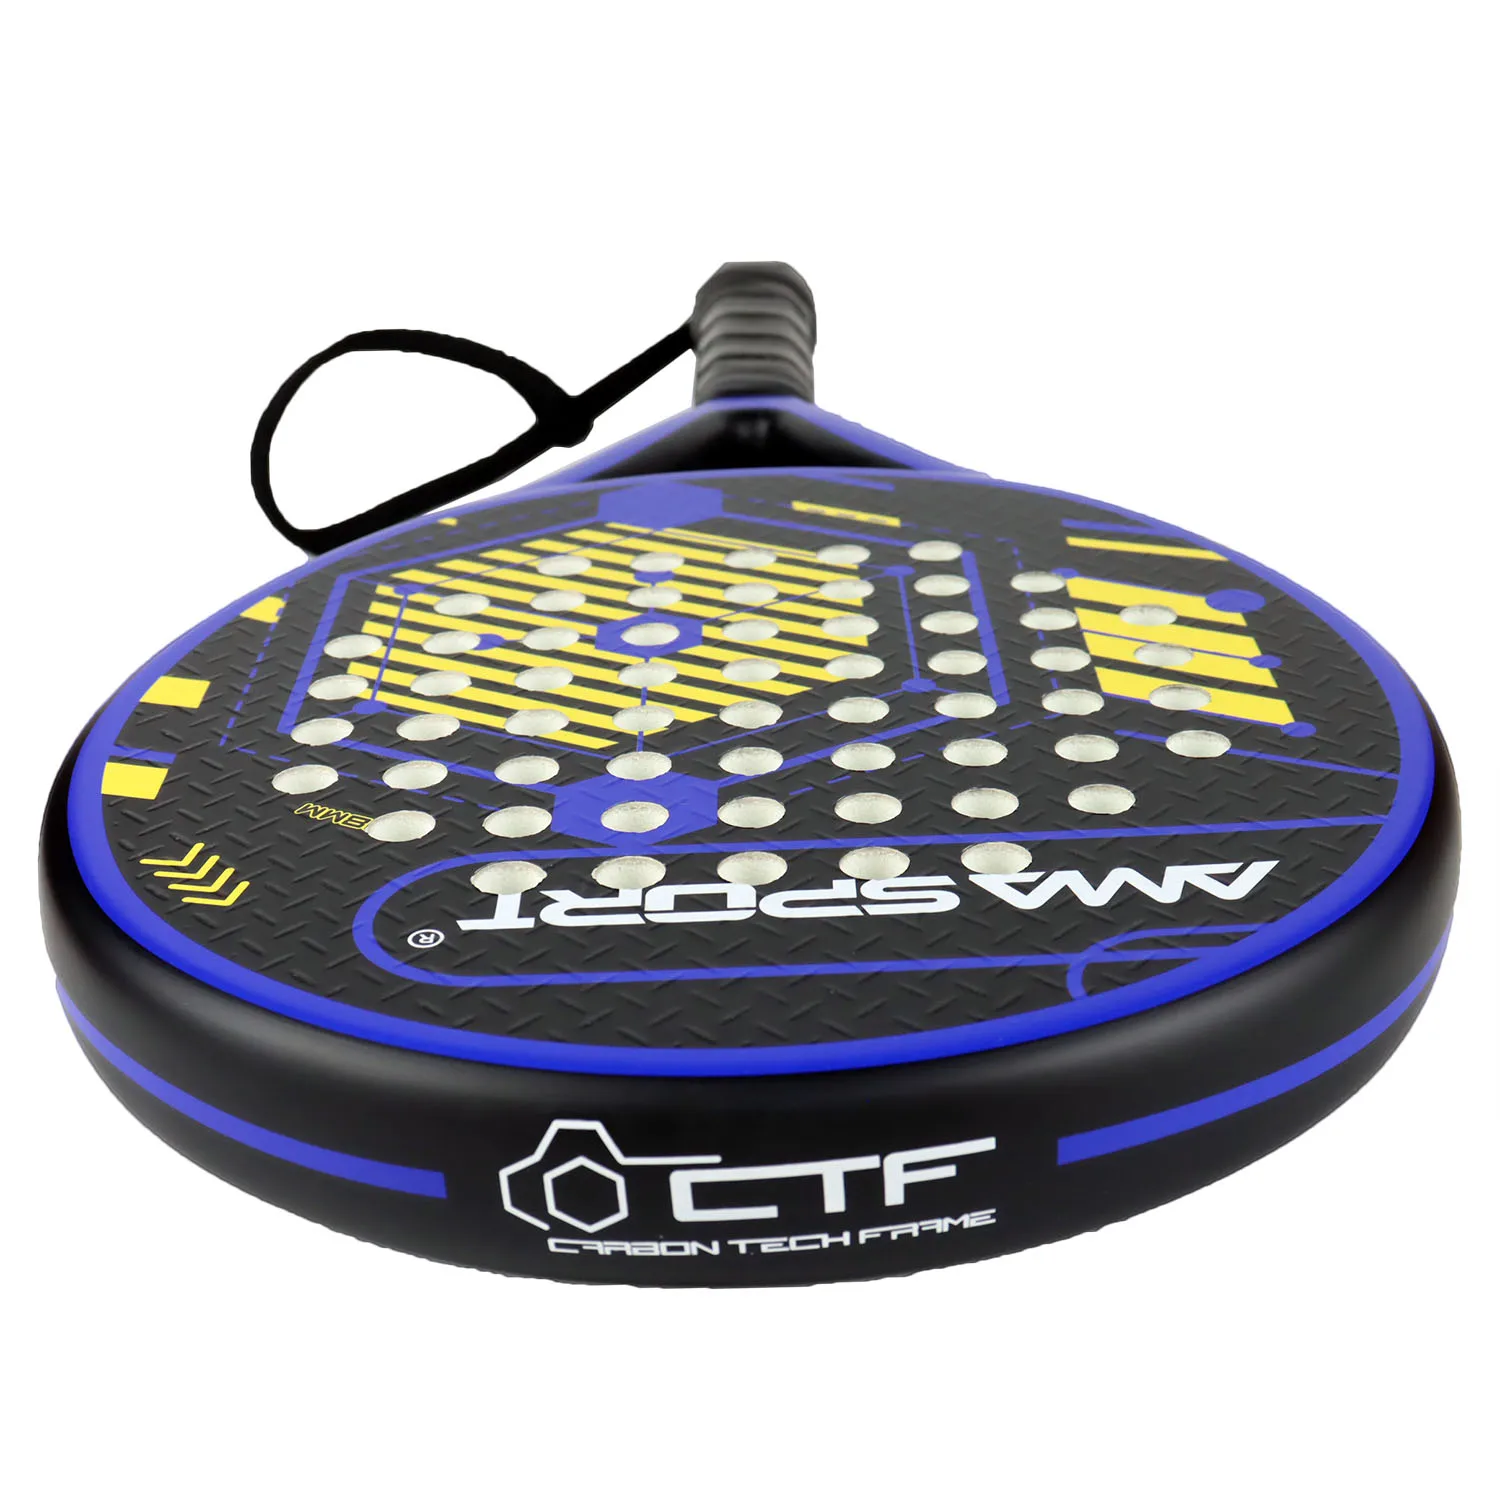 AMA SPORT Padle Paddle Racquet Tennis Racket Carbon Fiber Beach Tenis Padle EVA SOFT Memory Core 38mm